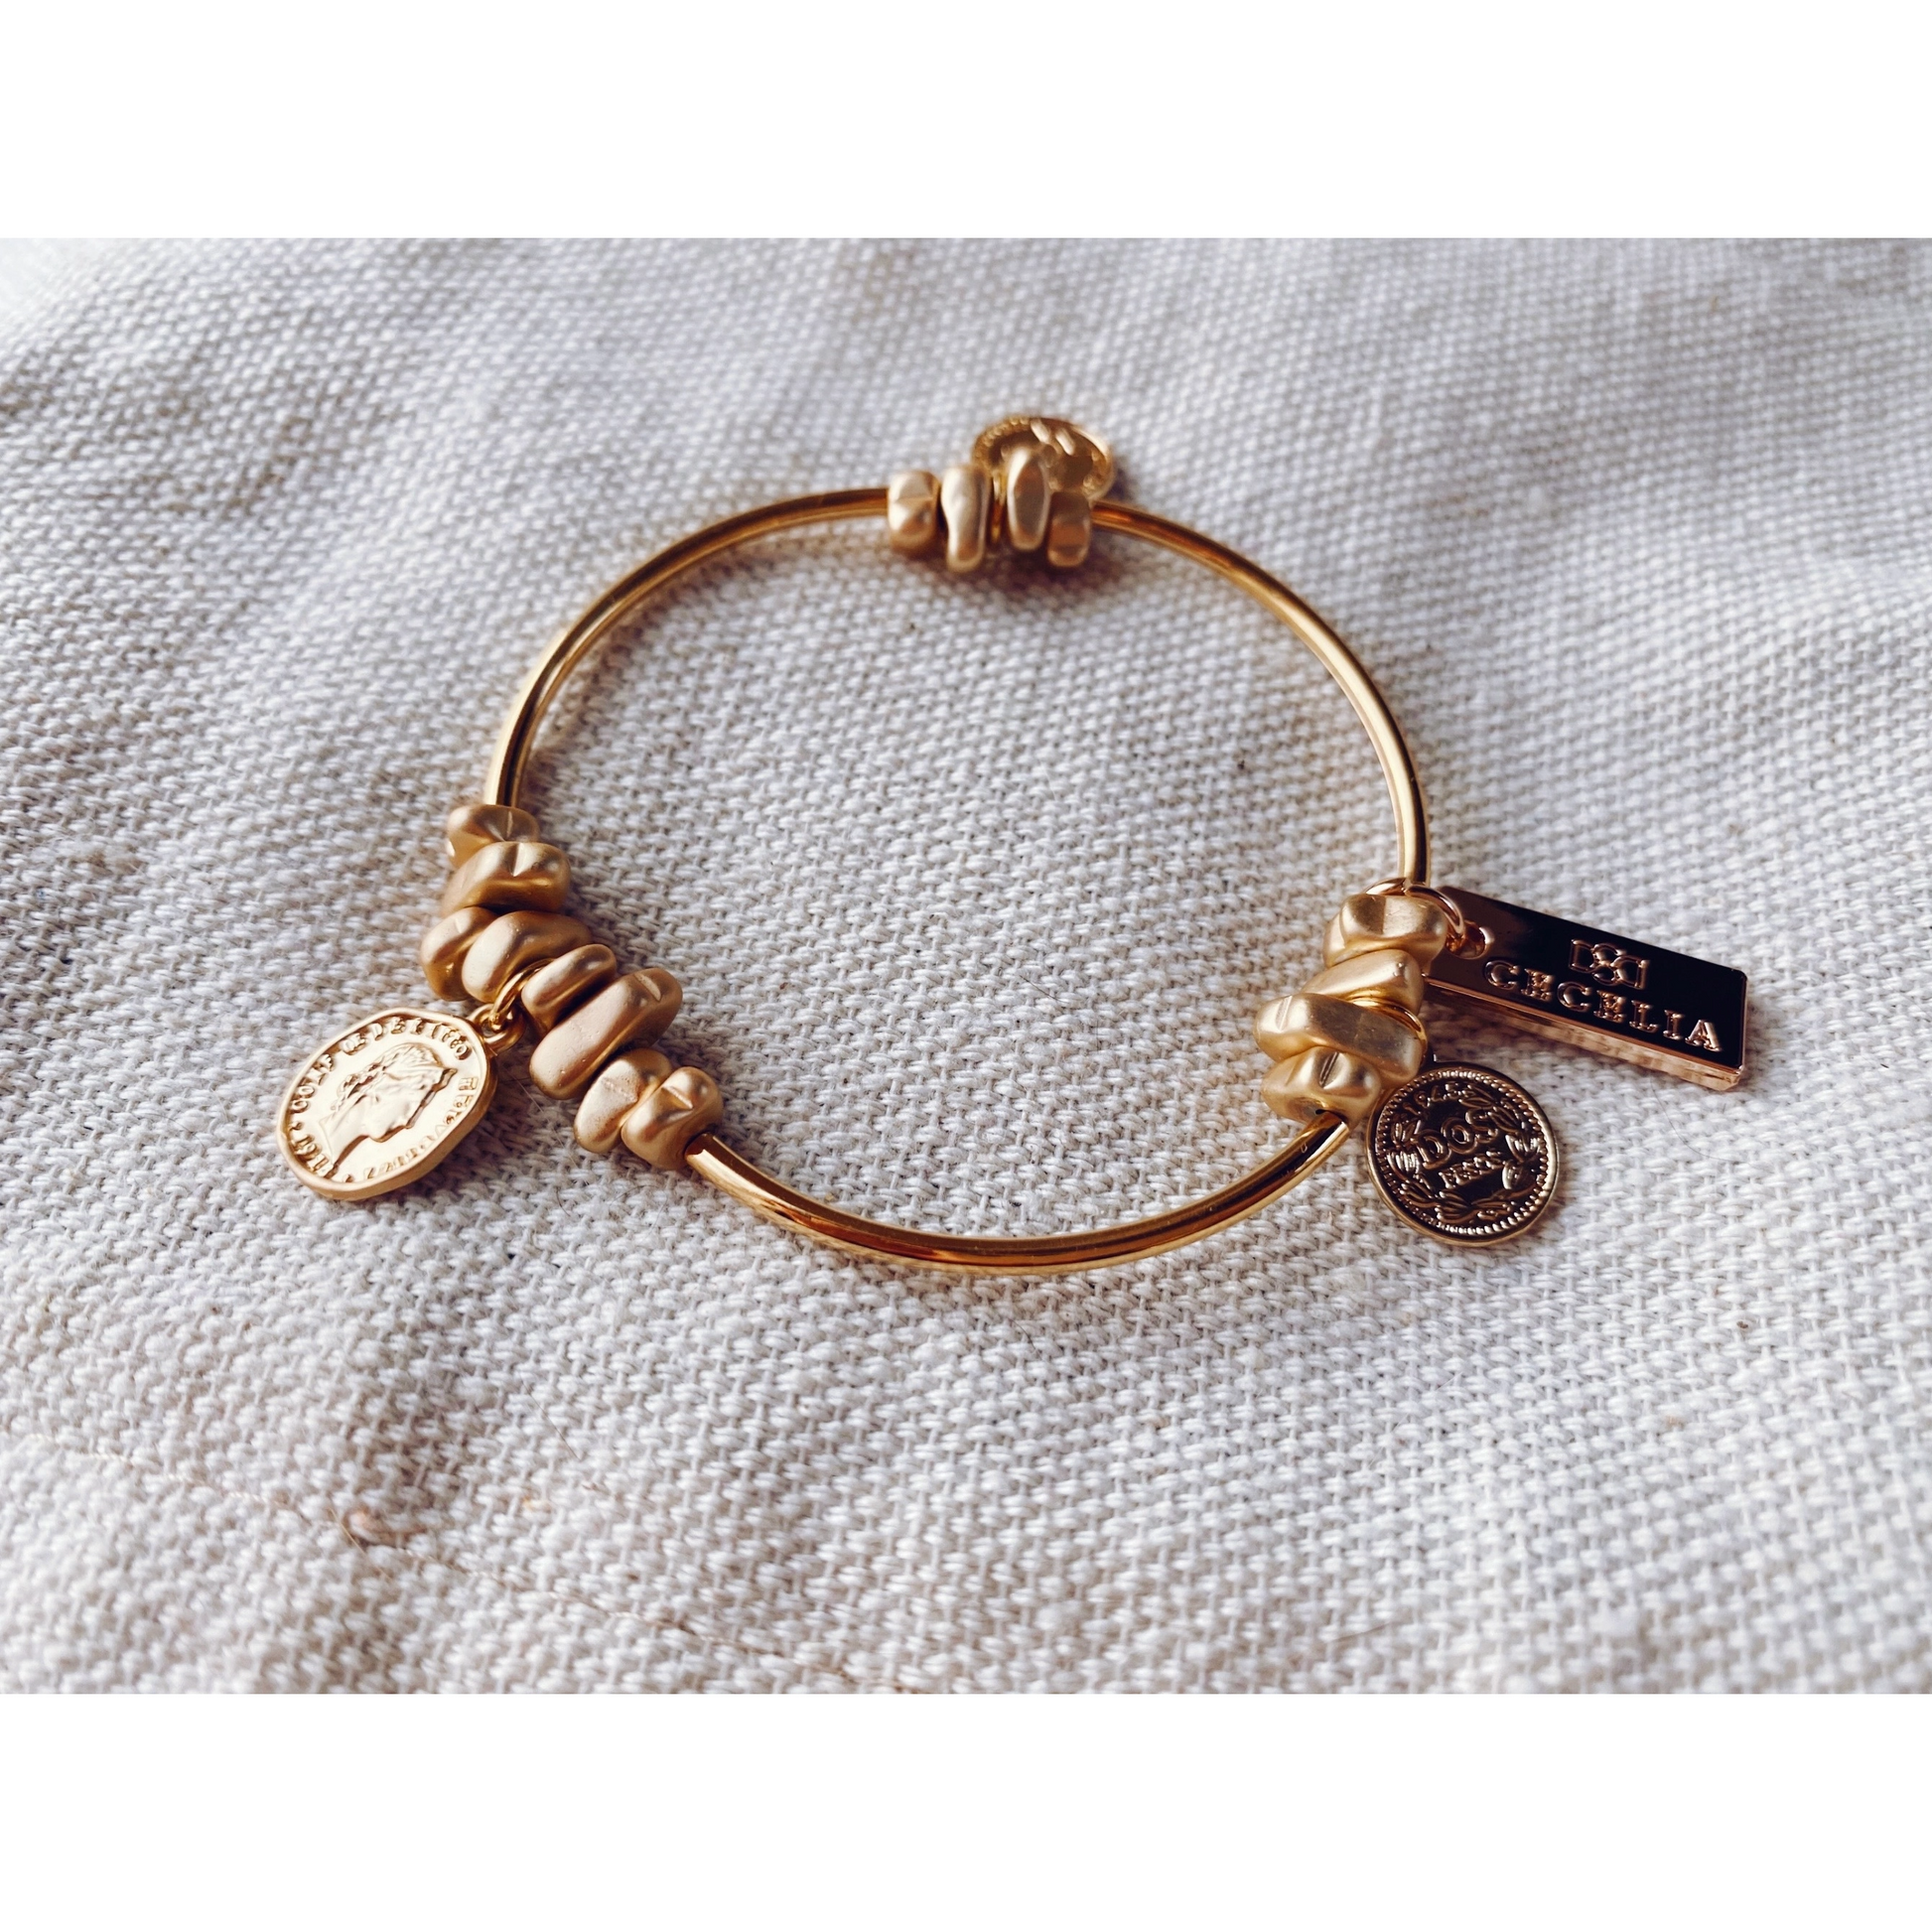 Coin Bracelet - 14k Gold Plated - Mellow Monkey